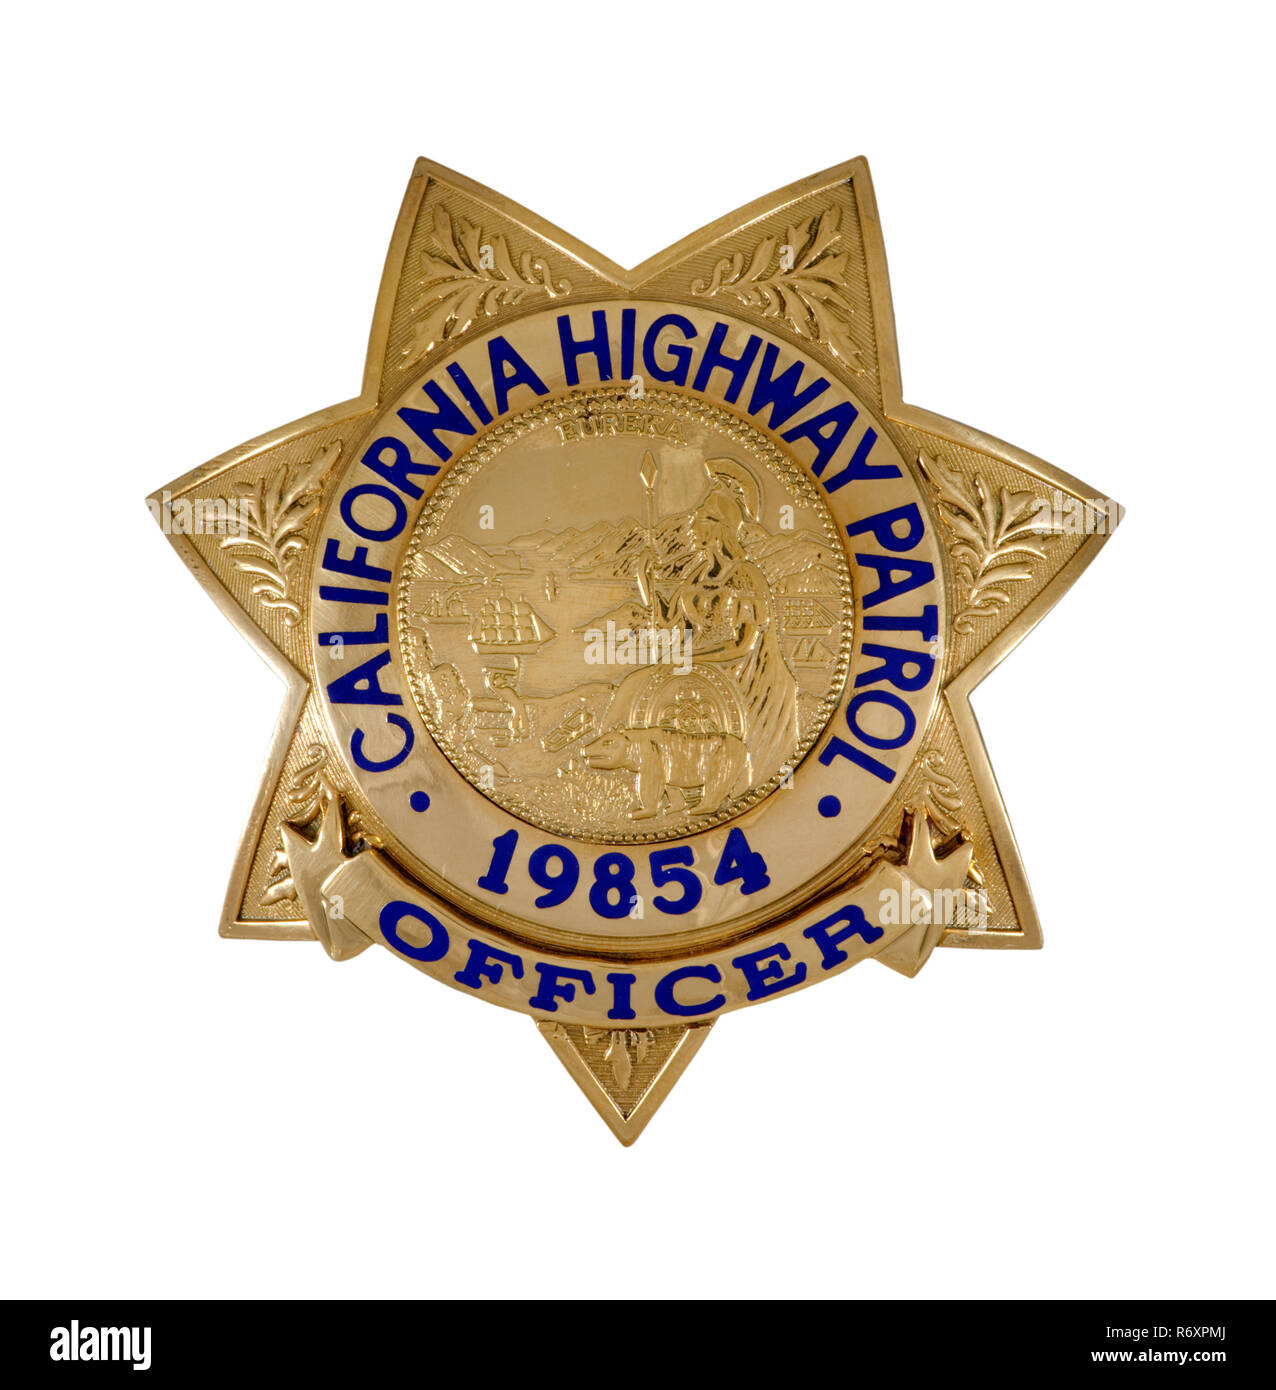 california highway patrol officer's badge Stock Photo